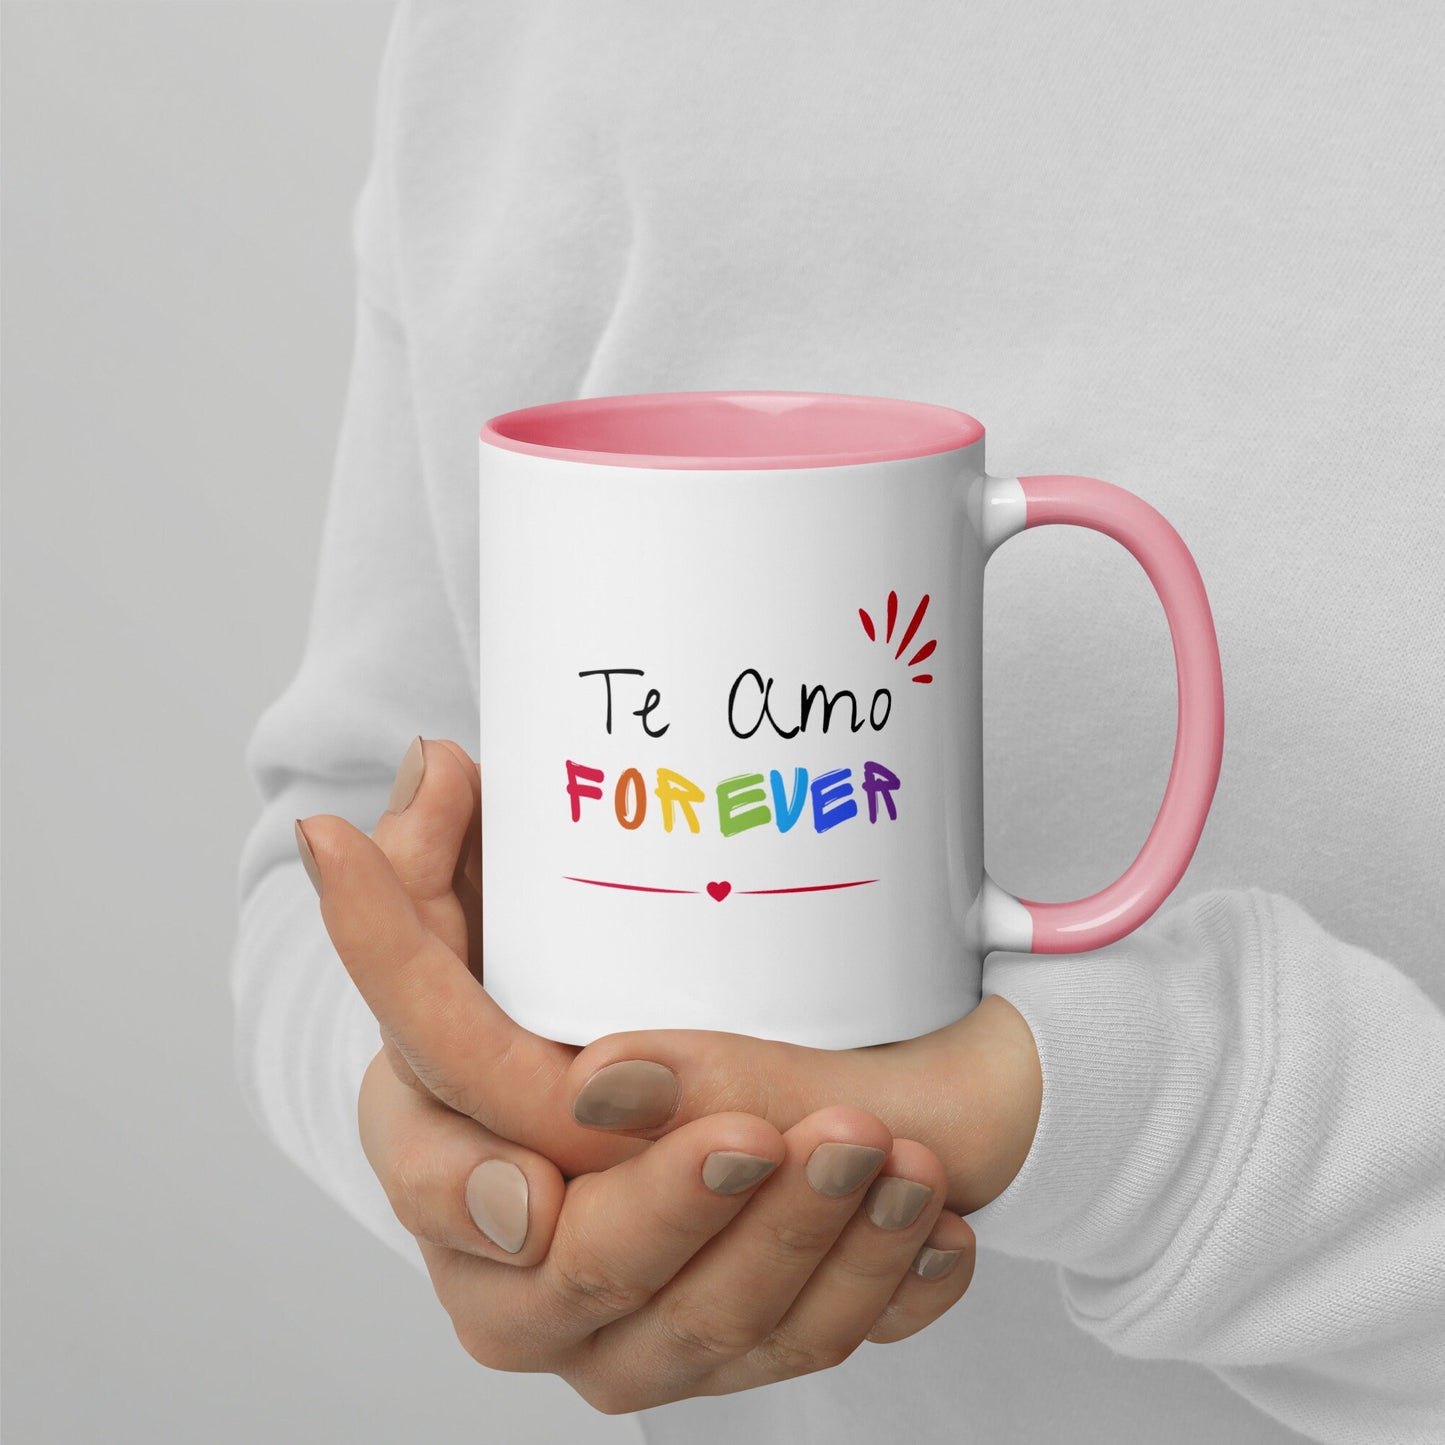 Te Amo Forever Mug with Color Inside